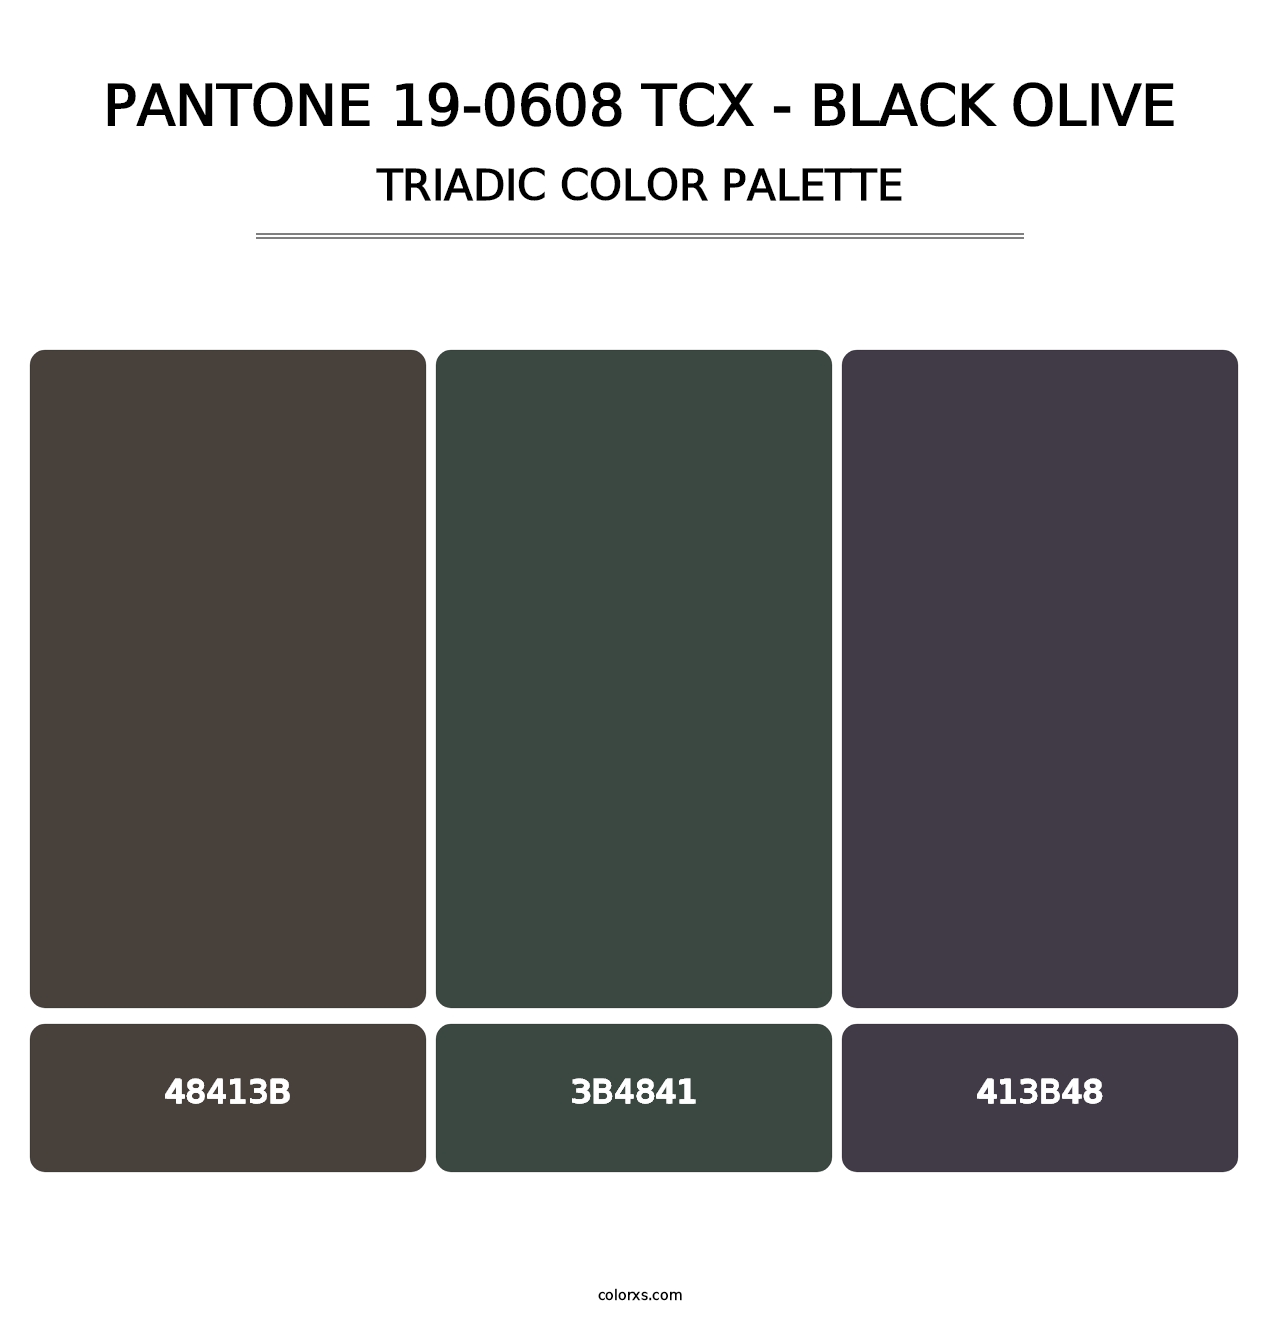 PANTONE 19-0608 TCX - Black Olive - Triadic Color Palette